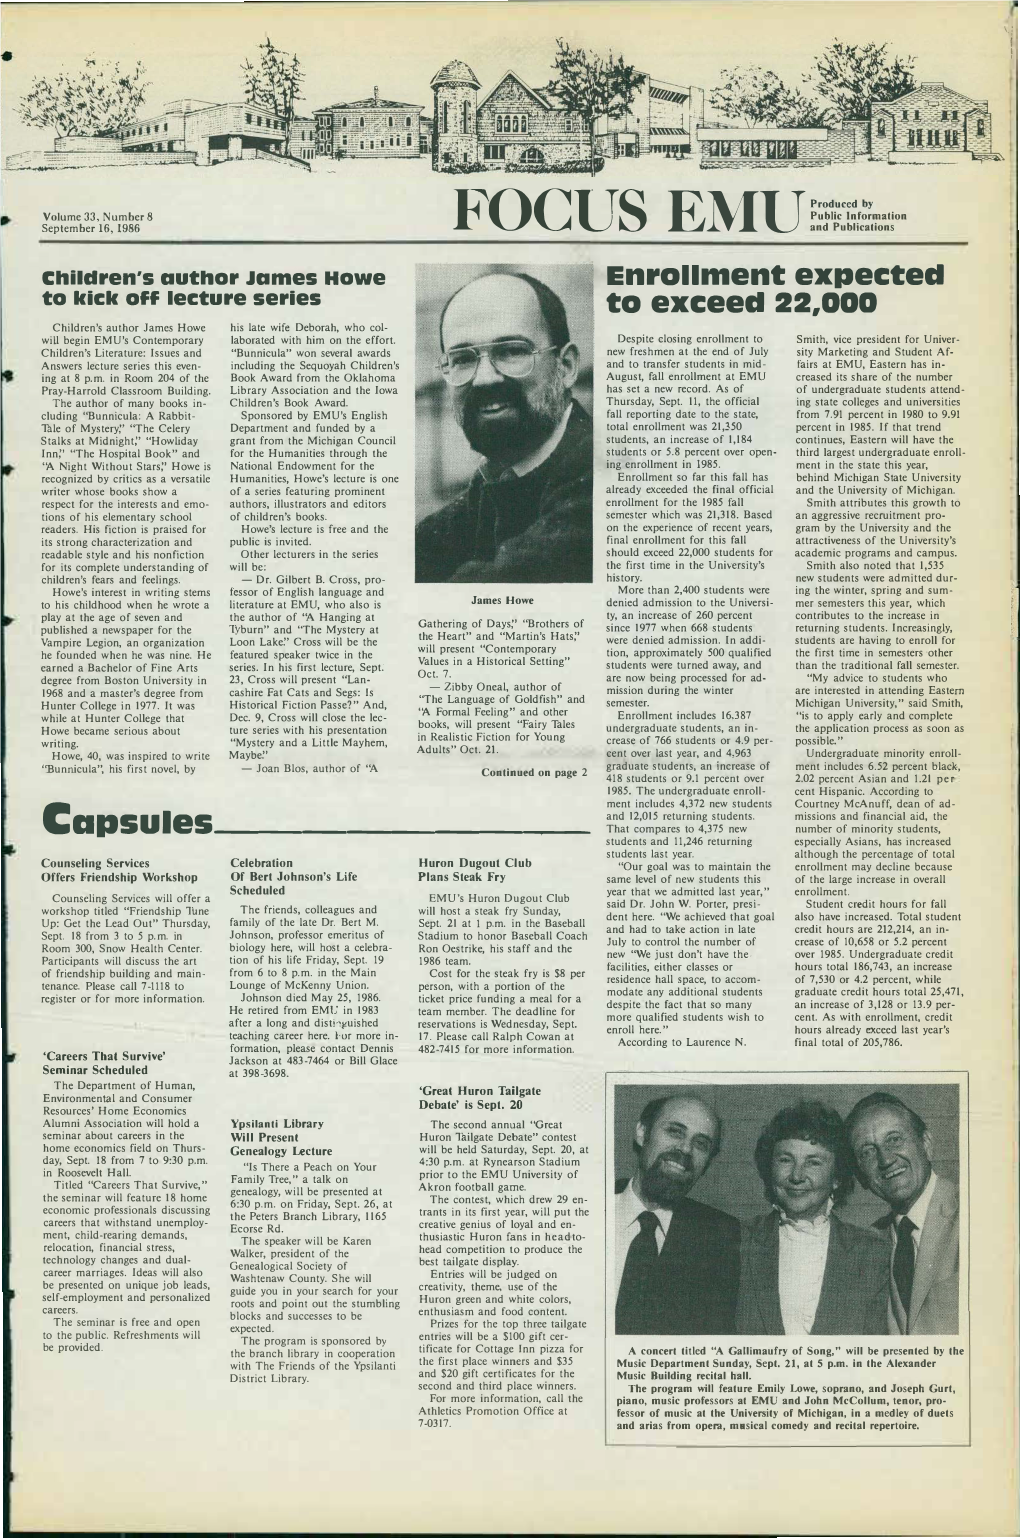 Focus EMU, September 16, 1986